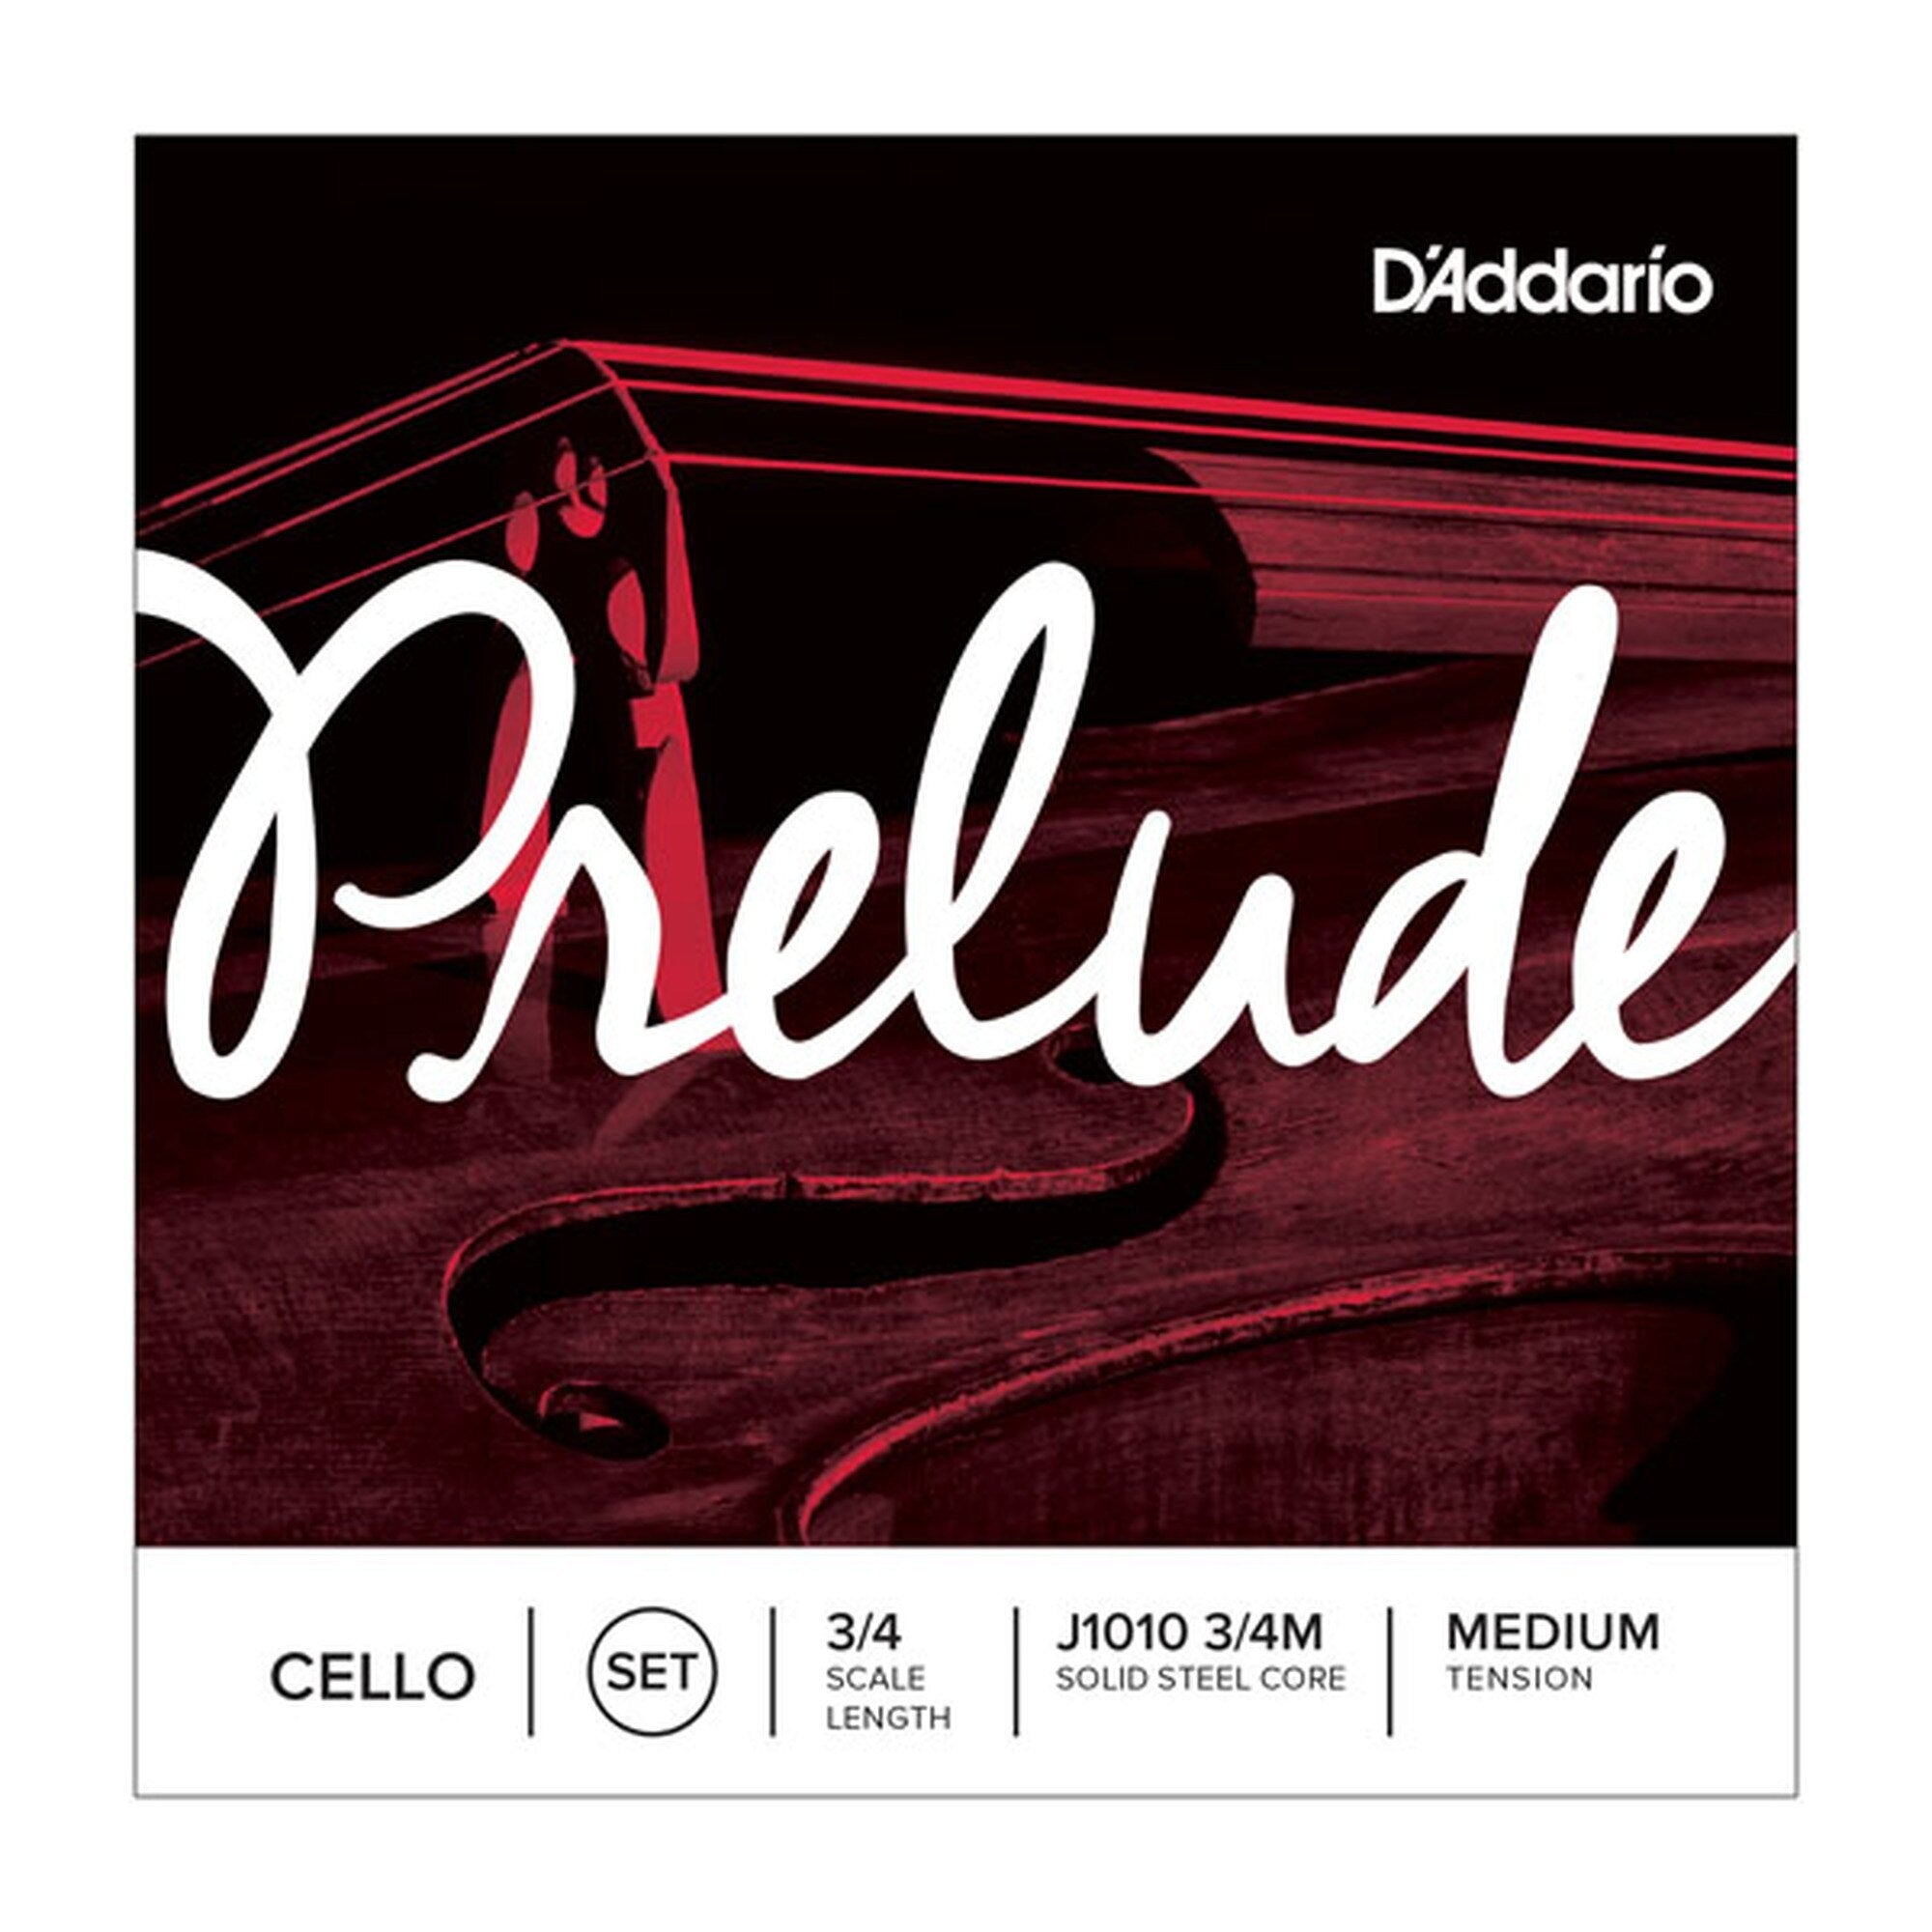 D'Addario Prelude Cello String Set, 3/4 Scale, Medium Tension